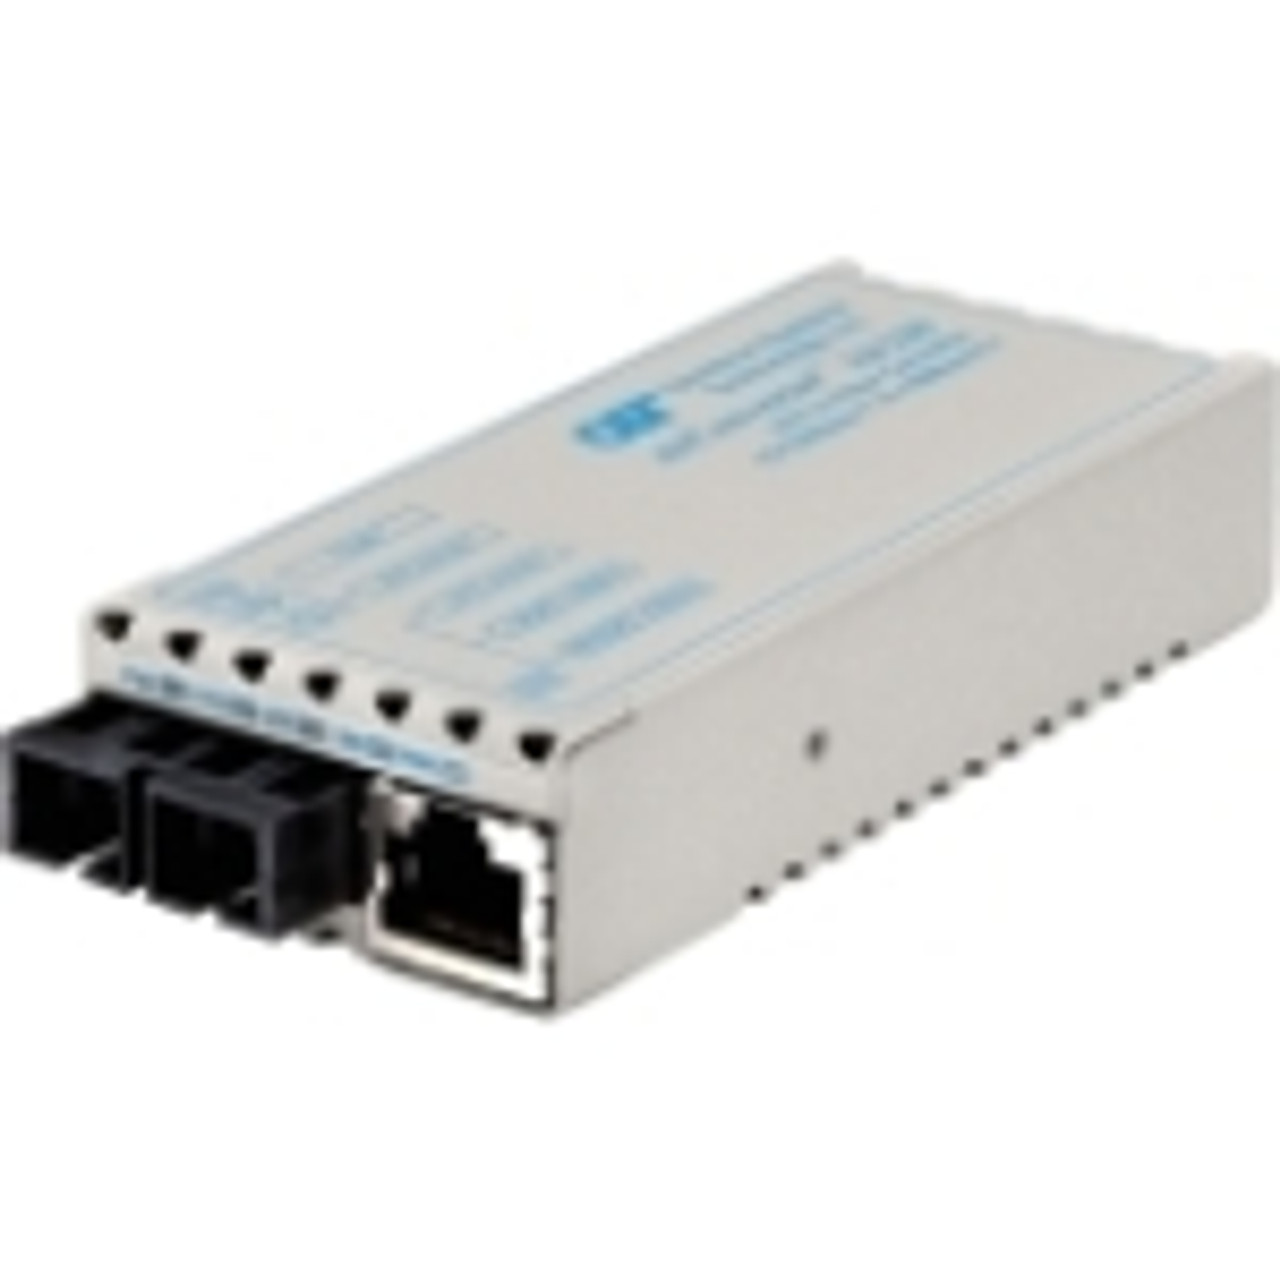 1122-0-1 miConverter 10/100 Plus Ethernet Fiber Media Converter RJ45 SC Multimode 5km 1 x 10/100BASE-TX, 1 x 100BASE-FX, US AC Powered,